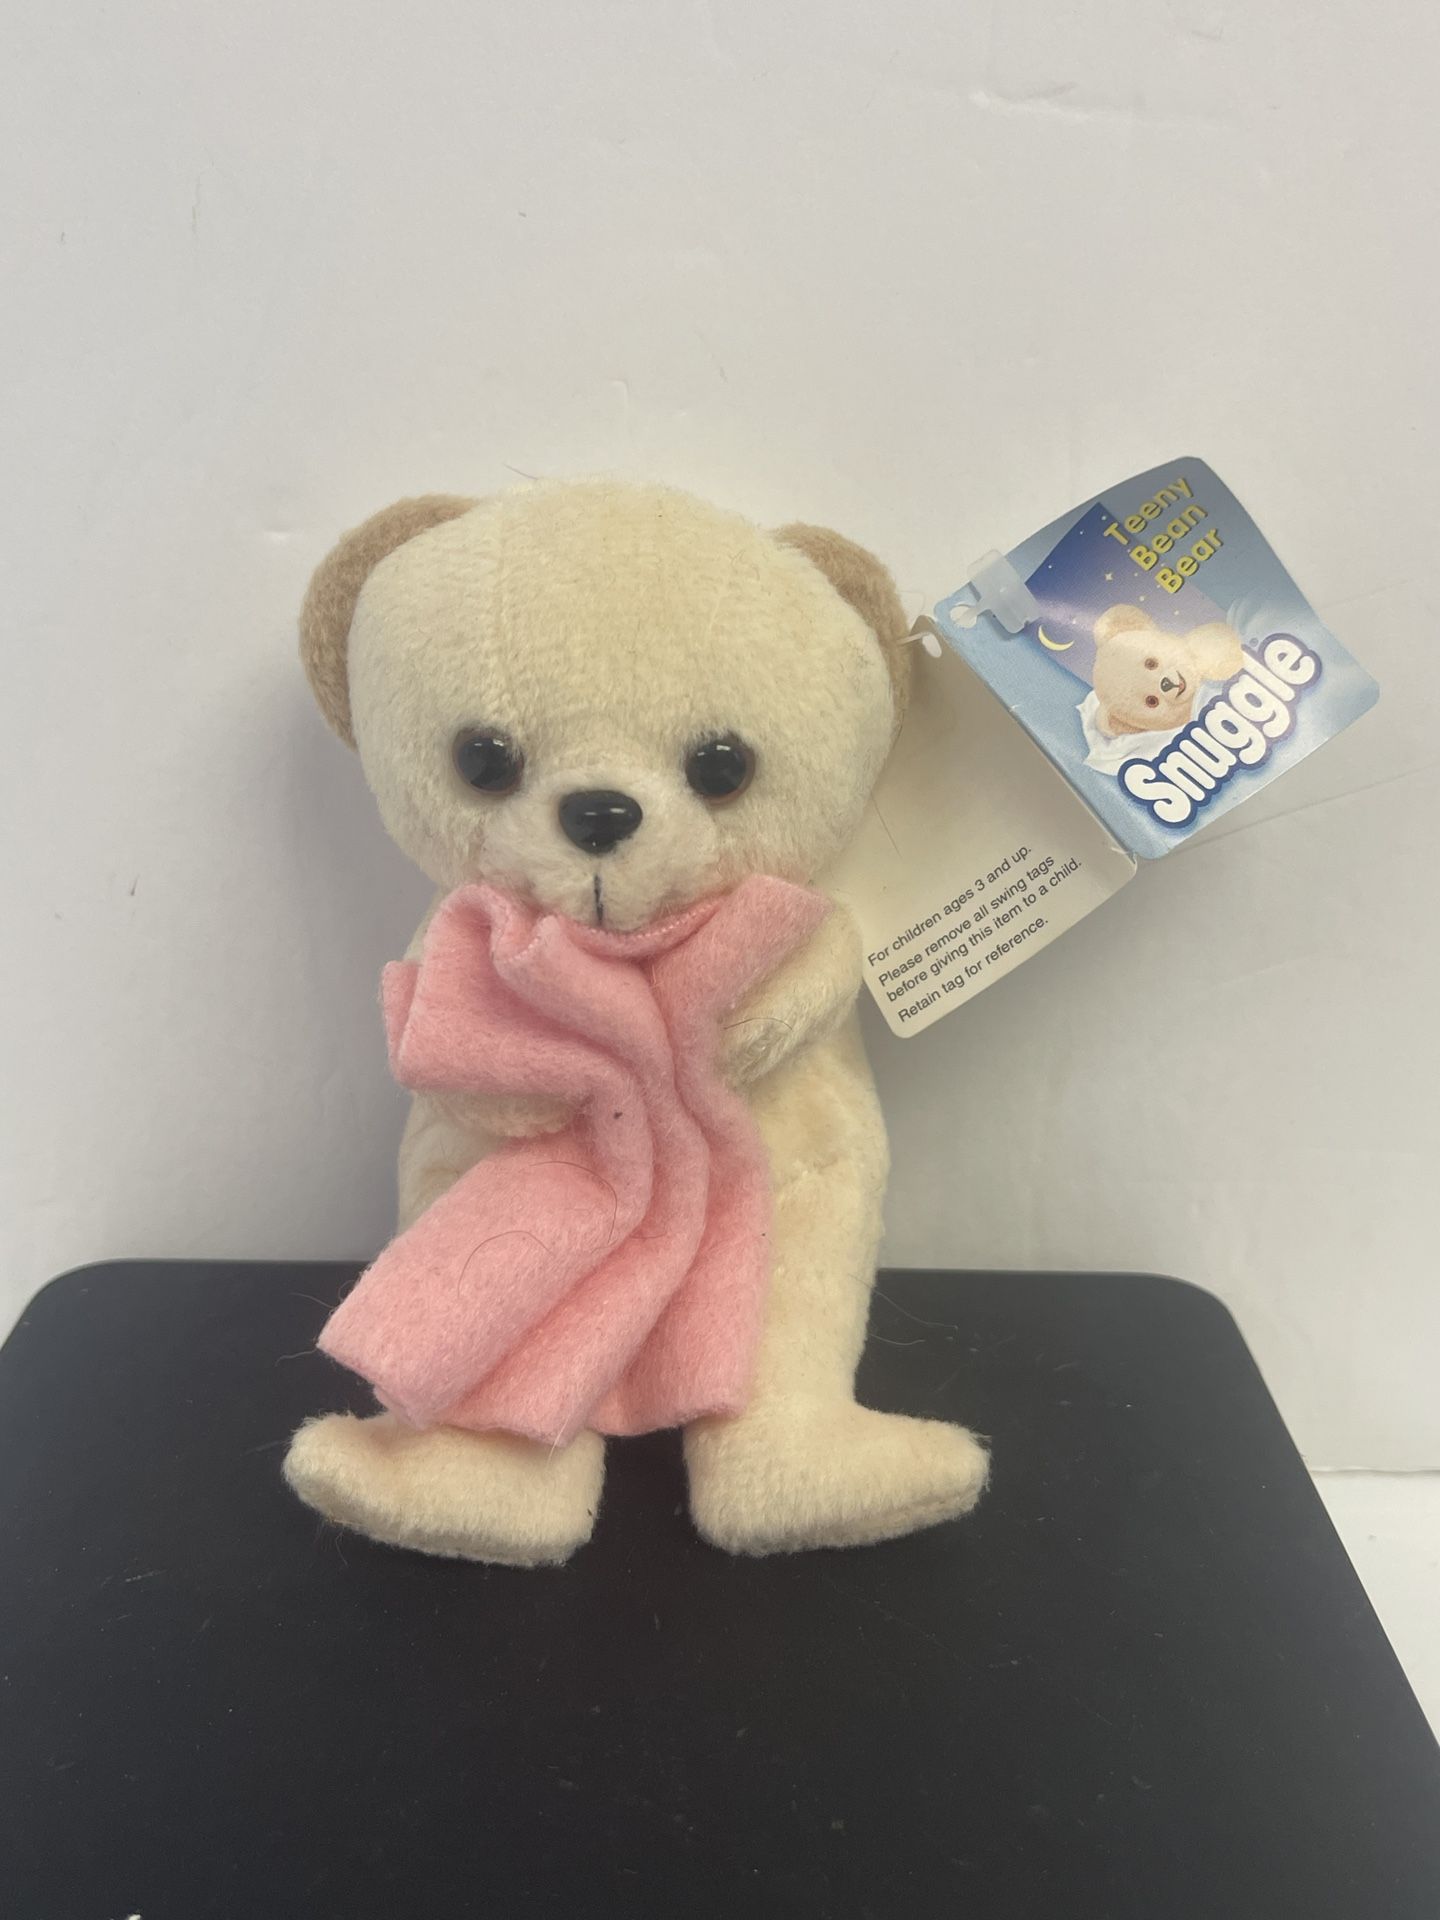 Snuggle fabric softener Plush Teddy Bear mini beanbag vintage pink blanket -U981